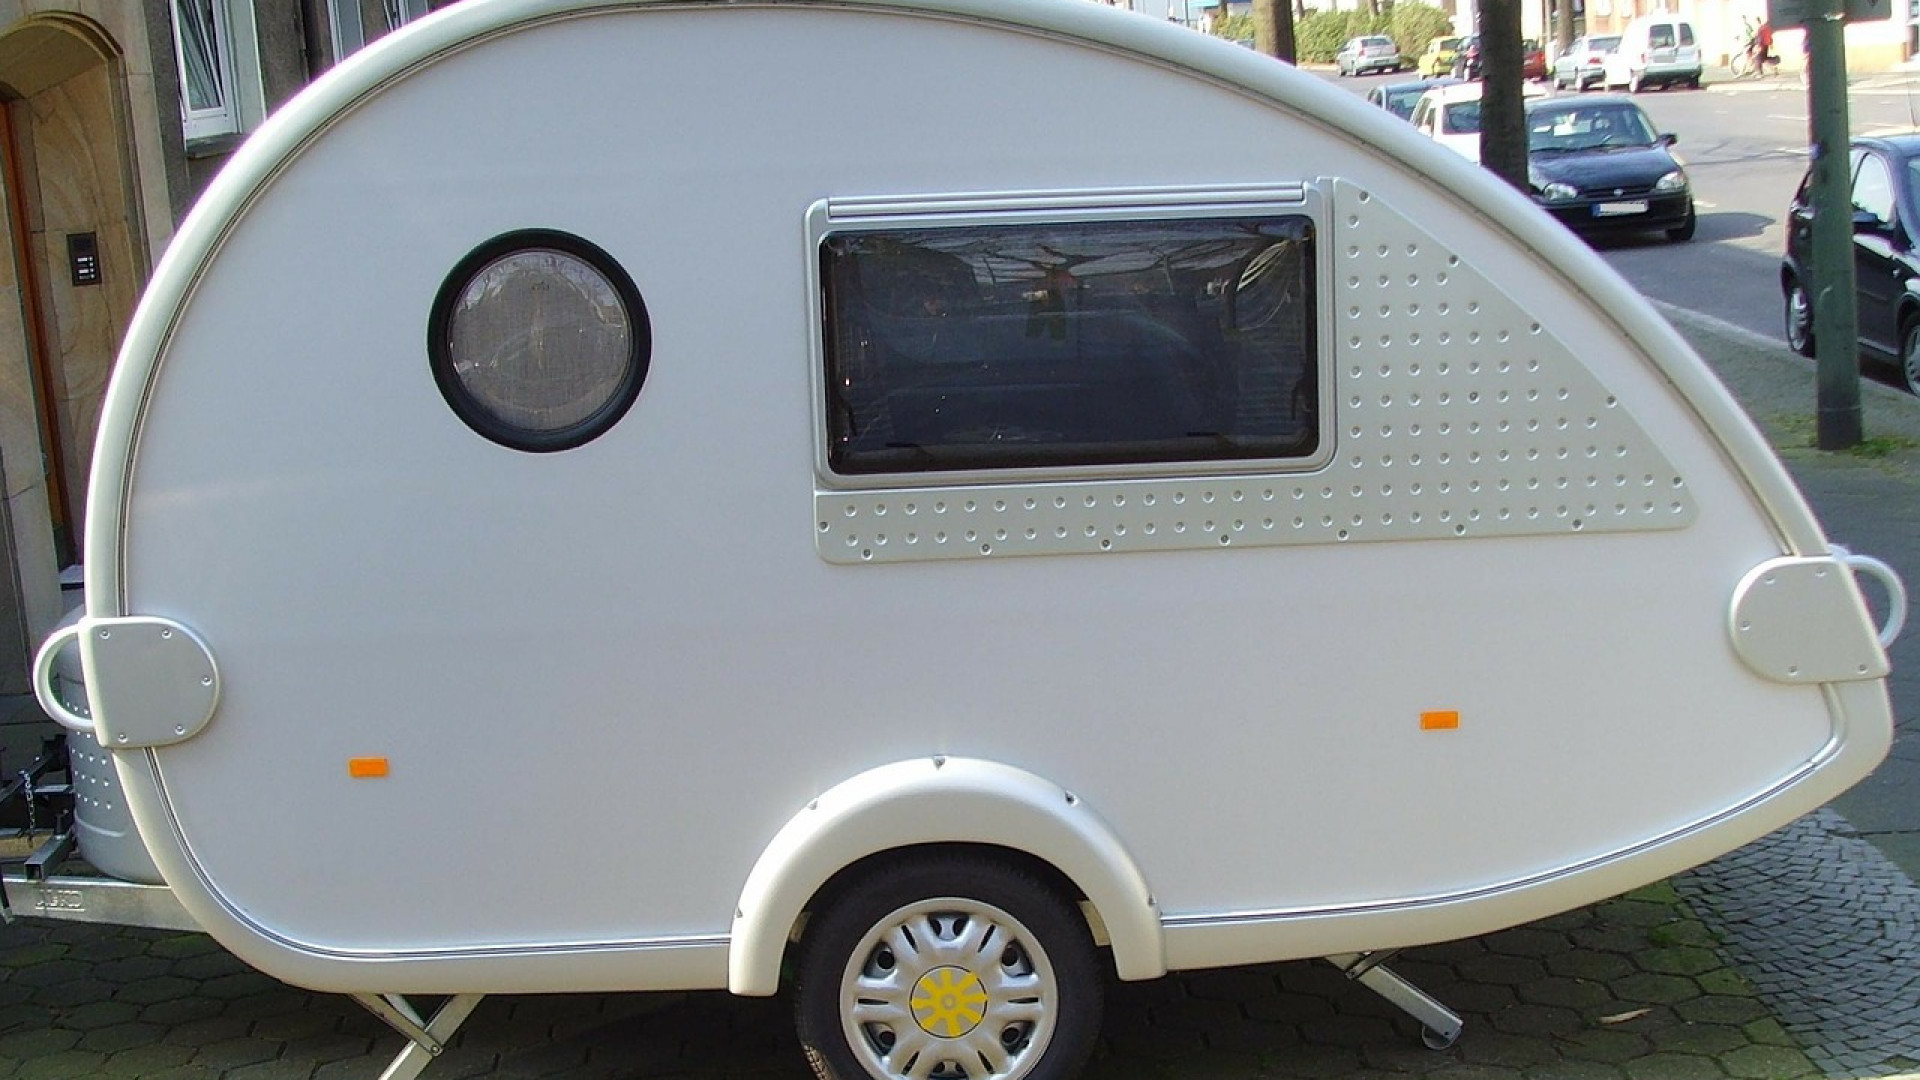 Camping ou caravane mobile : comment choisir